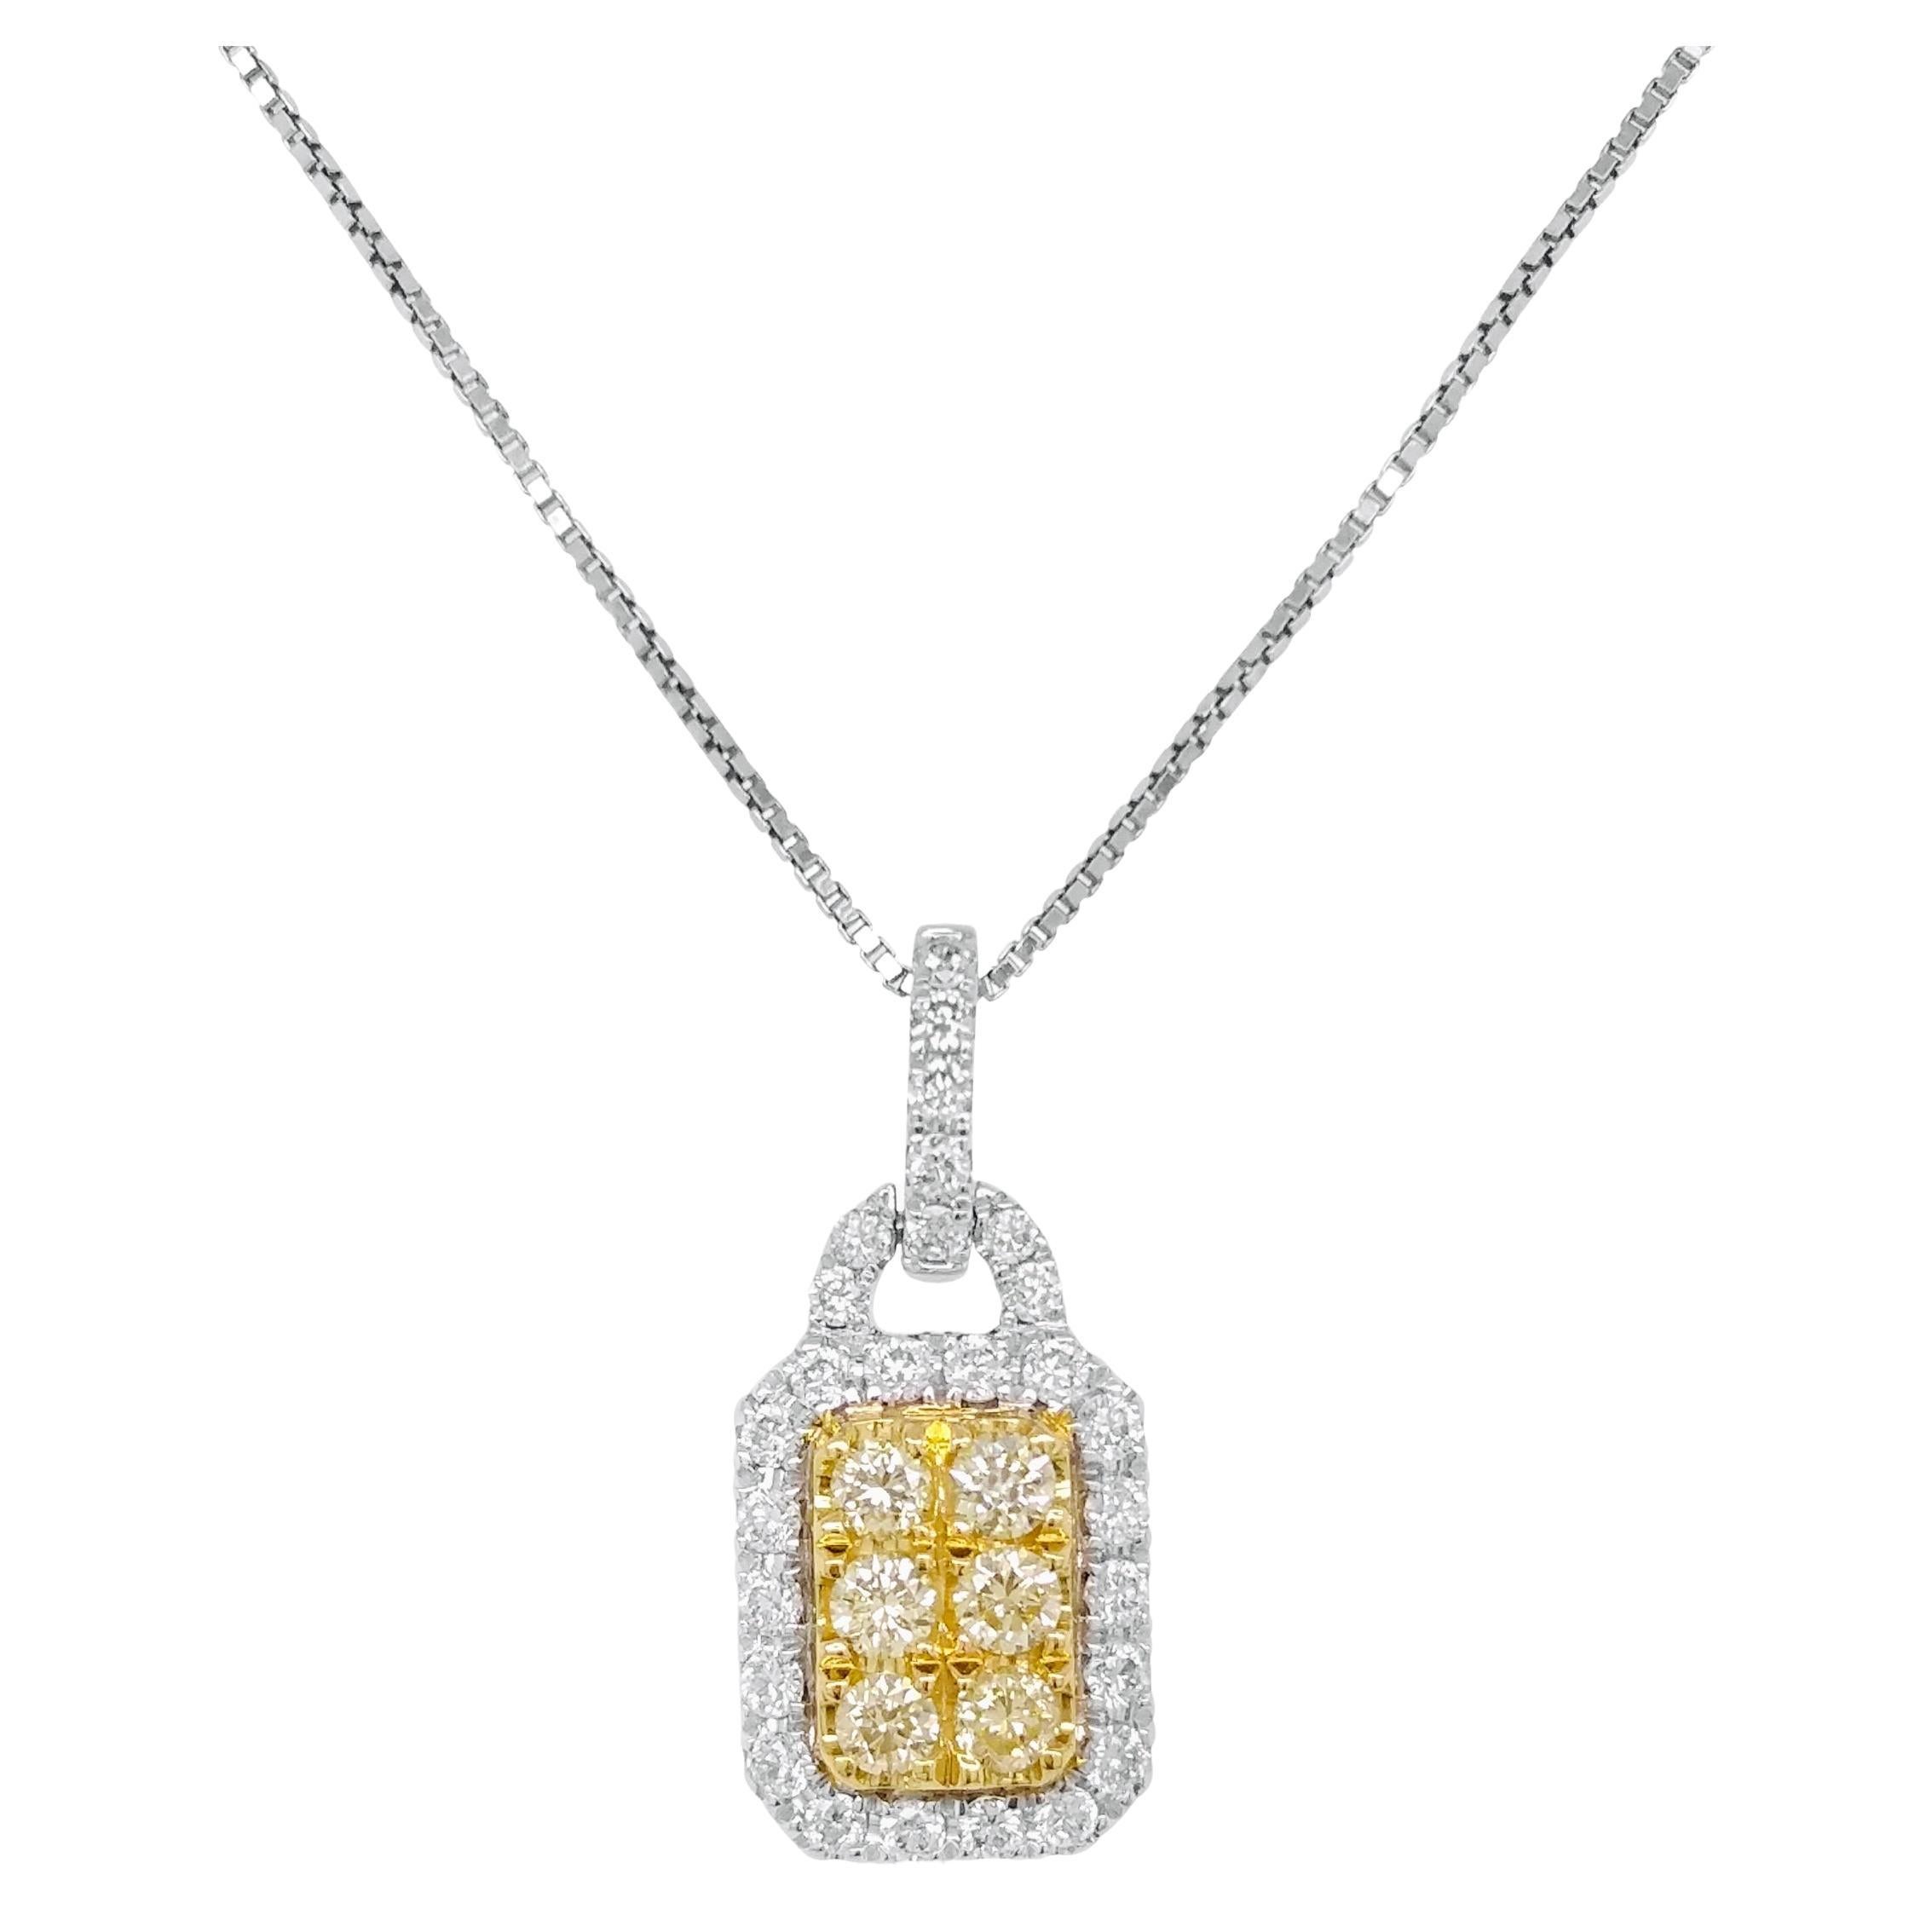 Yelloa Diamond Pendant Necklace with platinum Chain